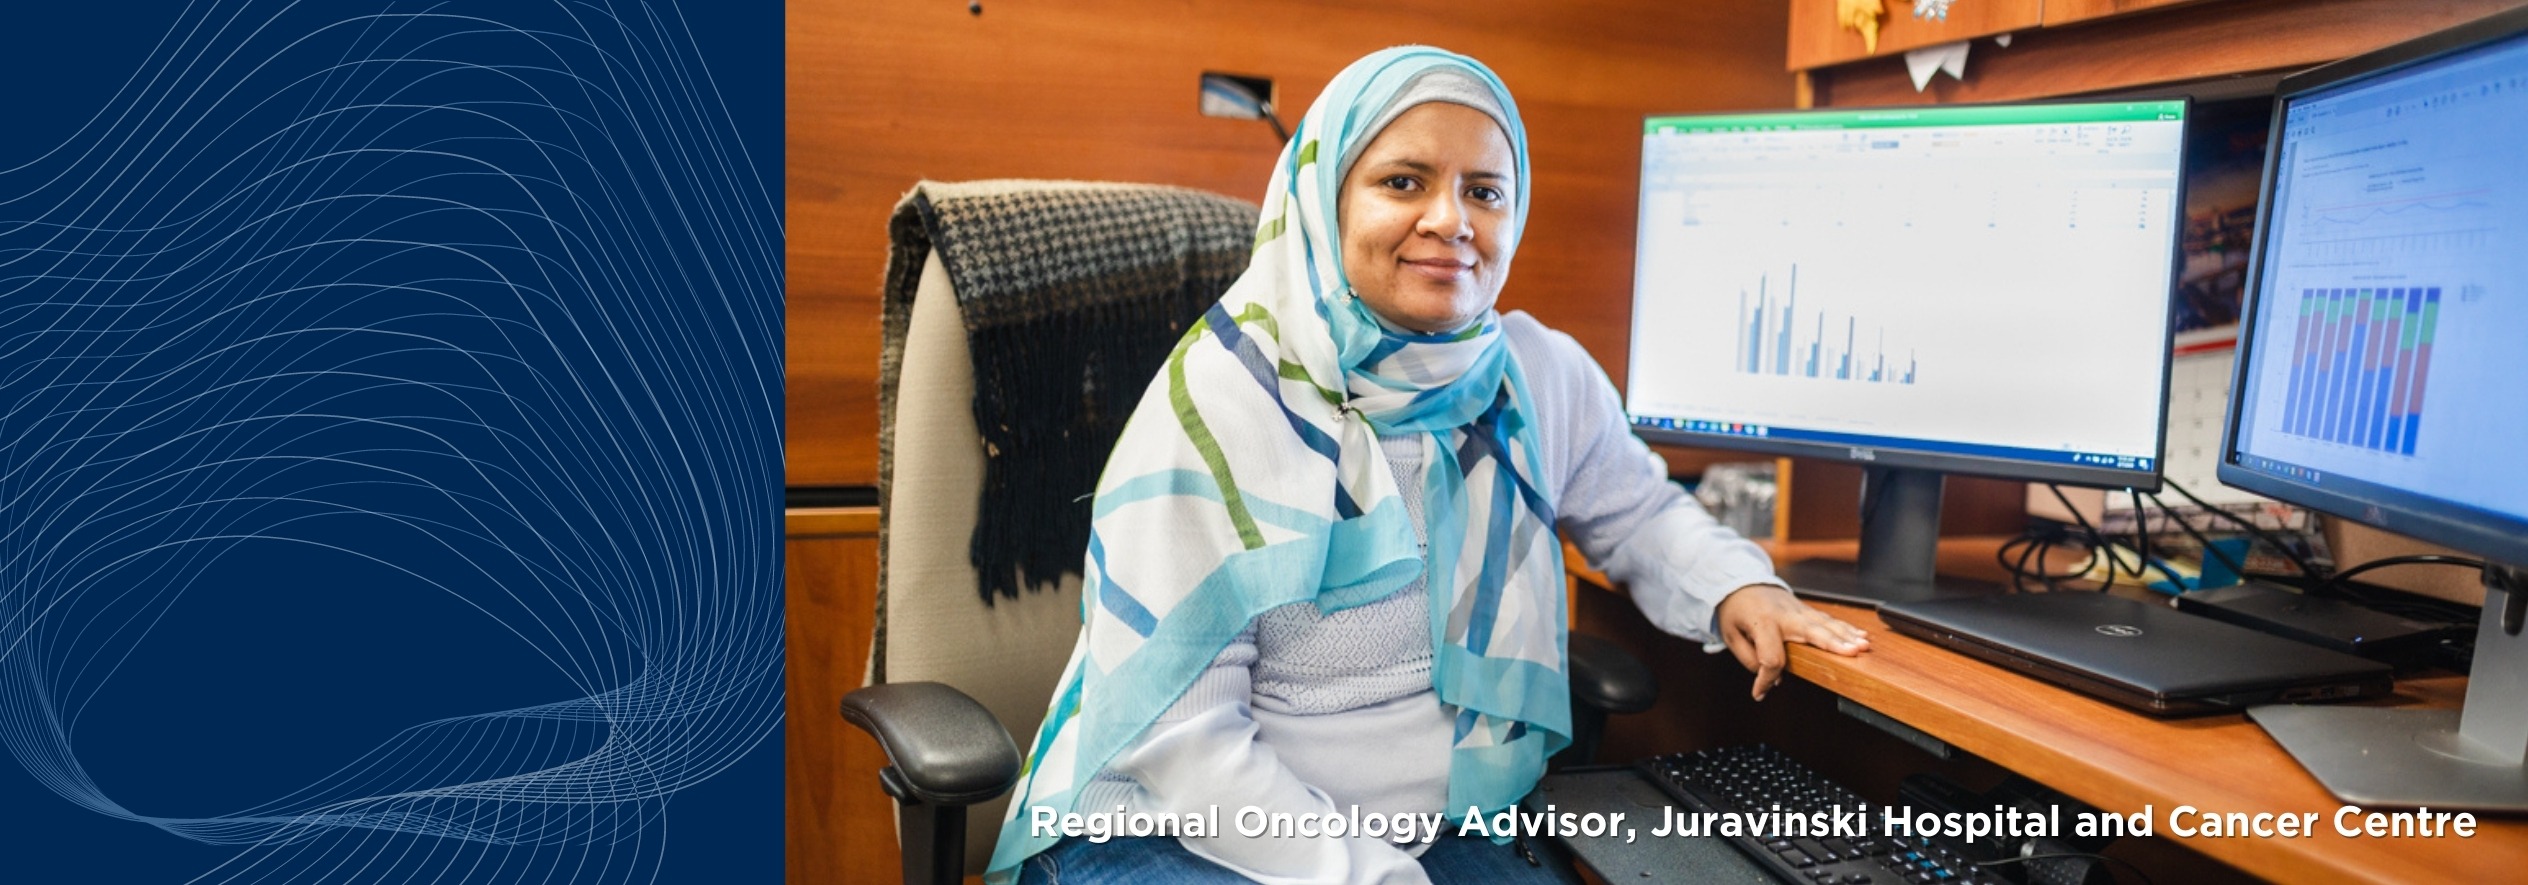 Regional Oncology Advisor, Juravinski Hospital and Cancer Centre